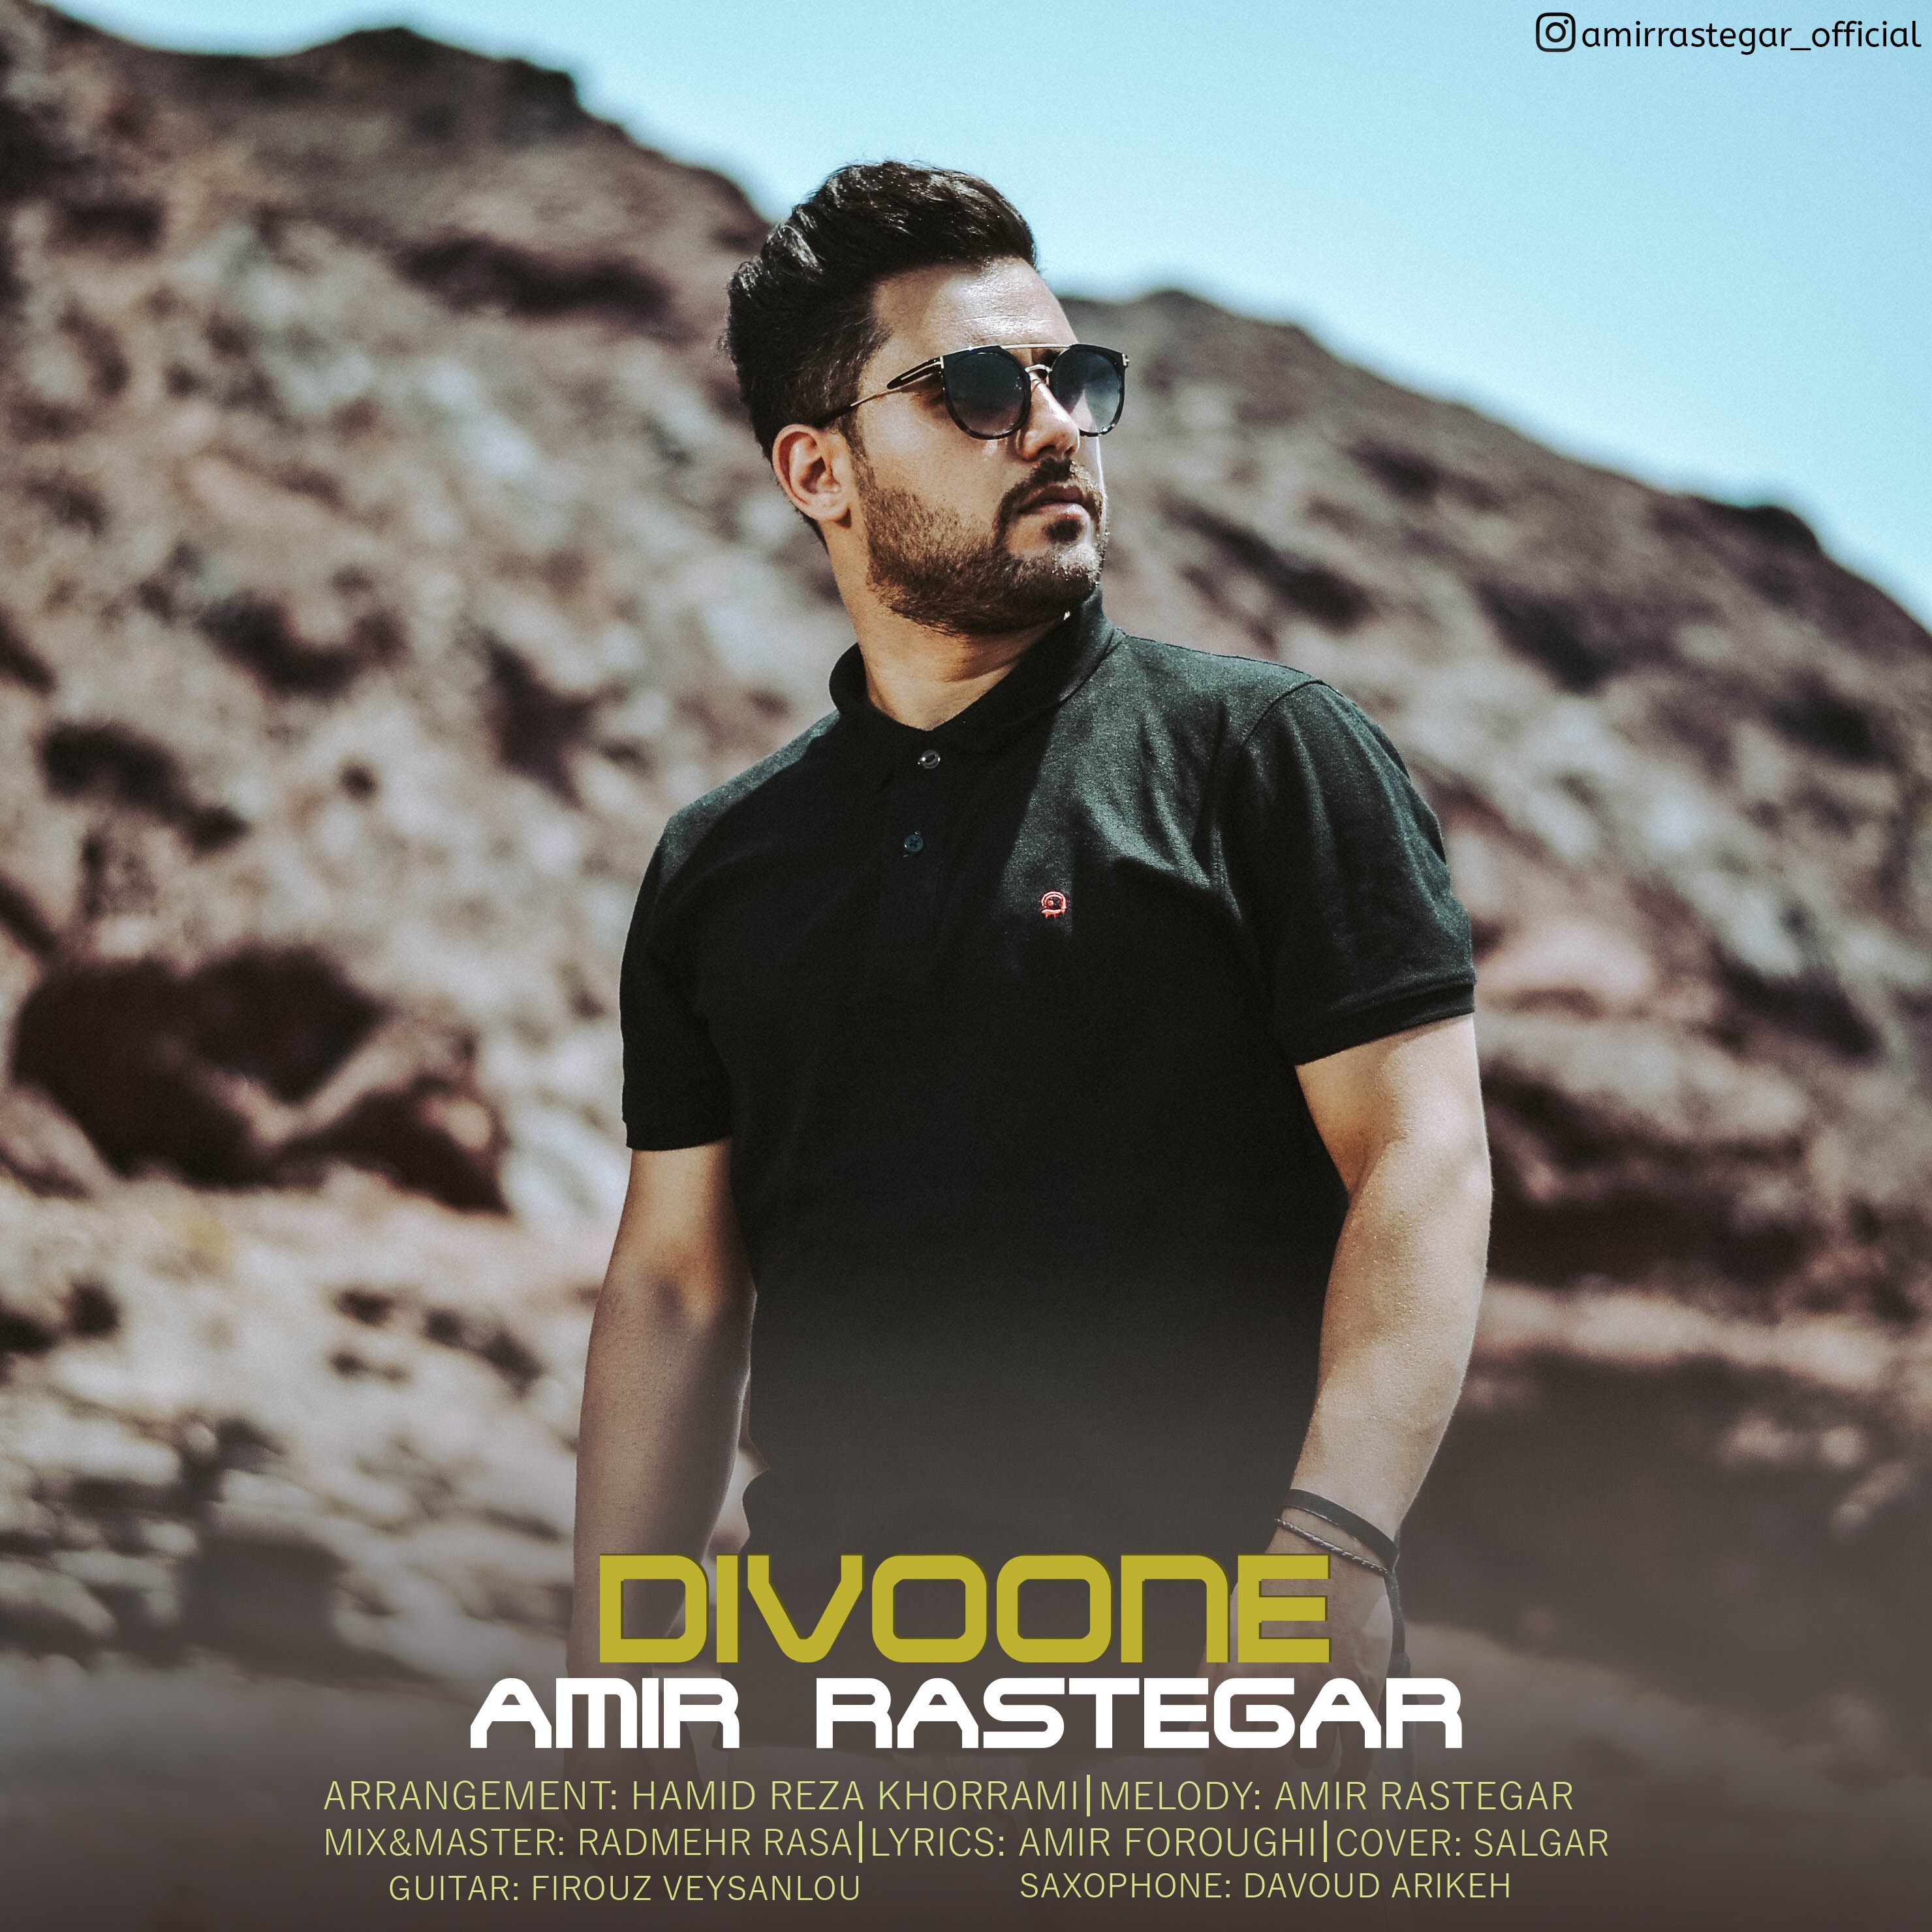  دانلود آهنگ جدید امیر رستگار - دیوونه | Download New Music By Amir Rastegar - Divoone